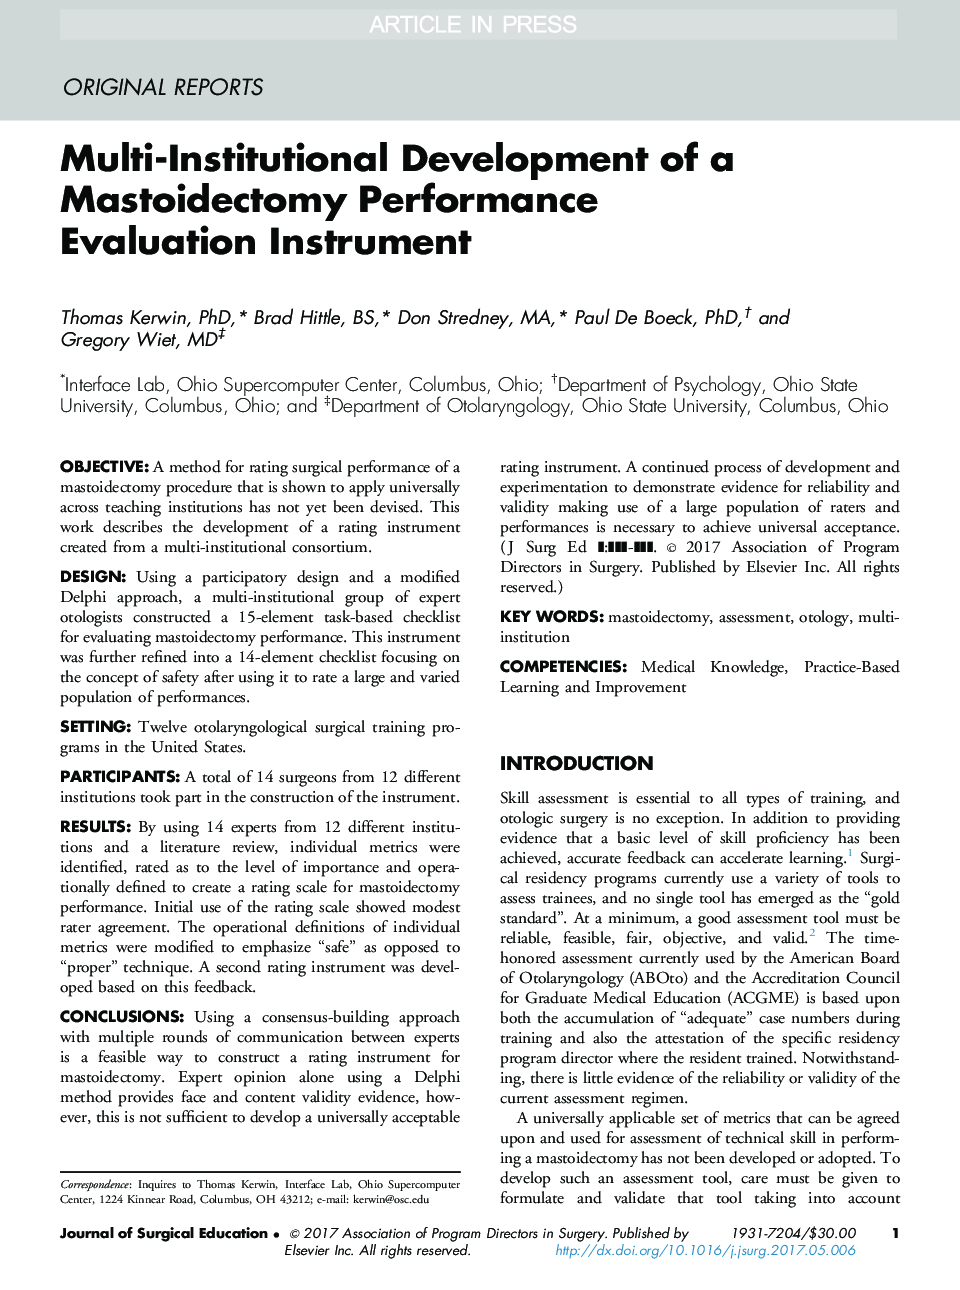 Multi-Institutional Development of a Mastoidectomy Performance Evaluation Instrument